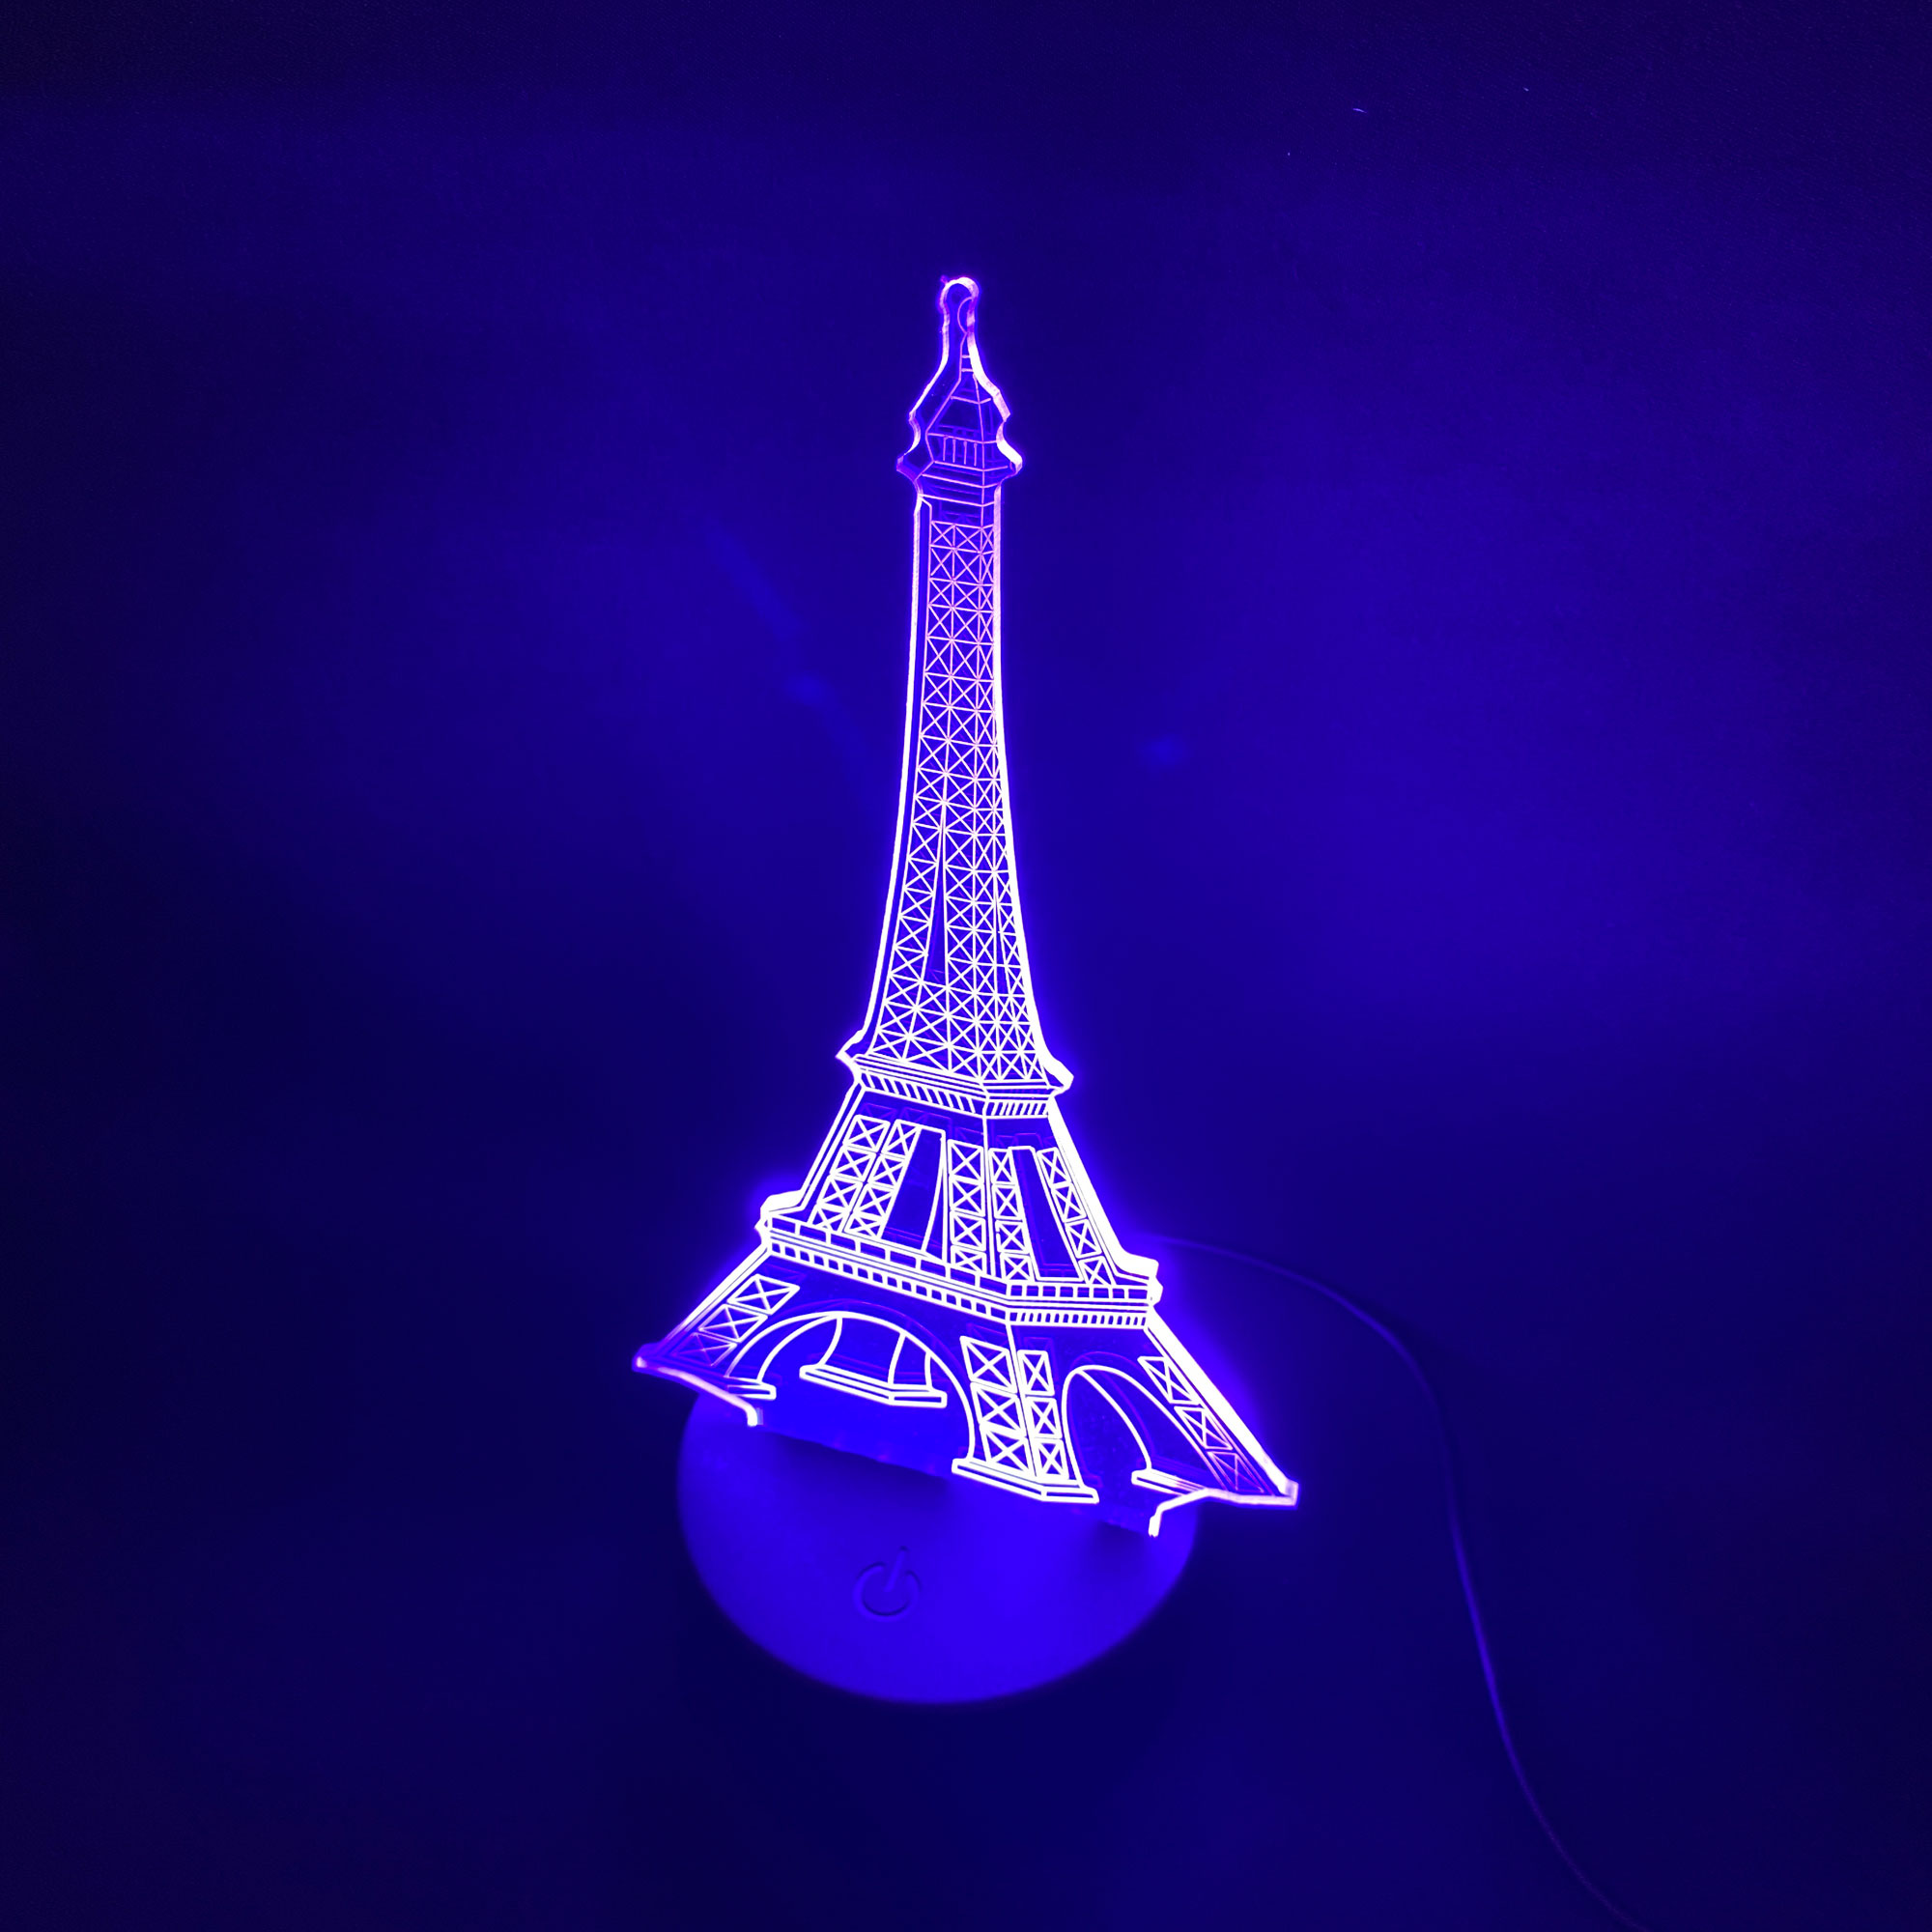 Lampe 3D Tour Eiffel Letras y Carteles de Neón Personalizados